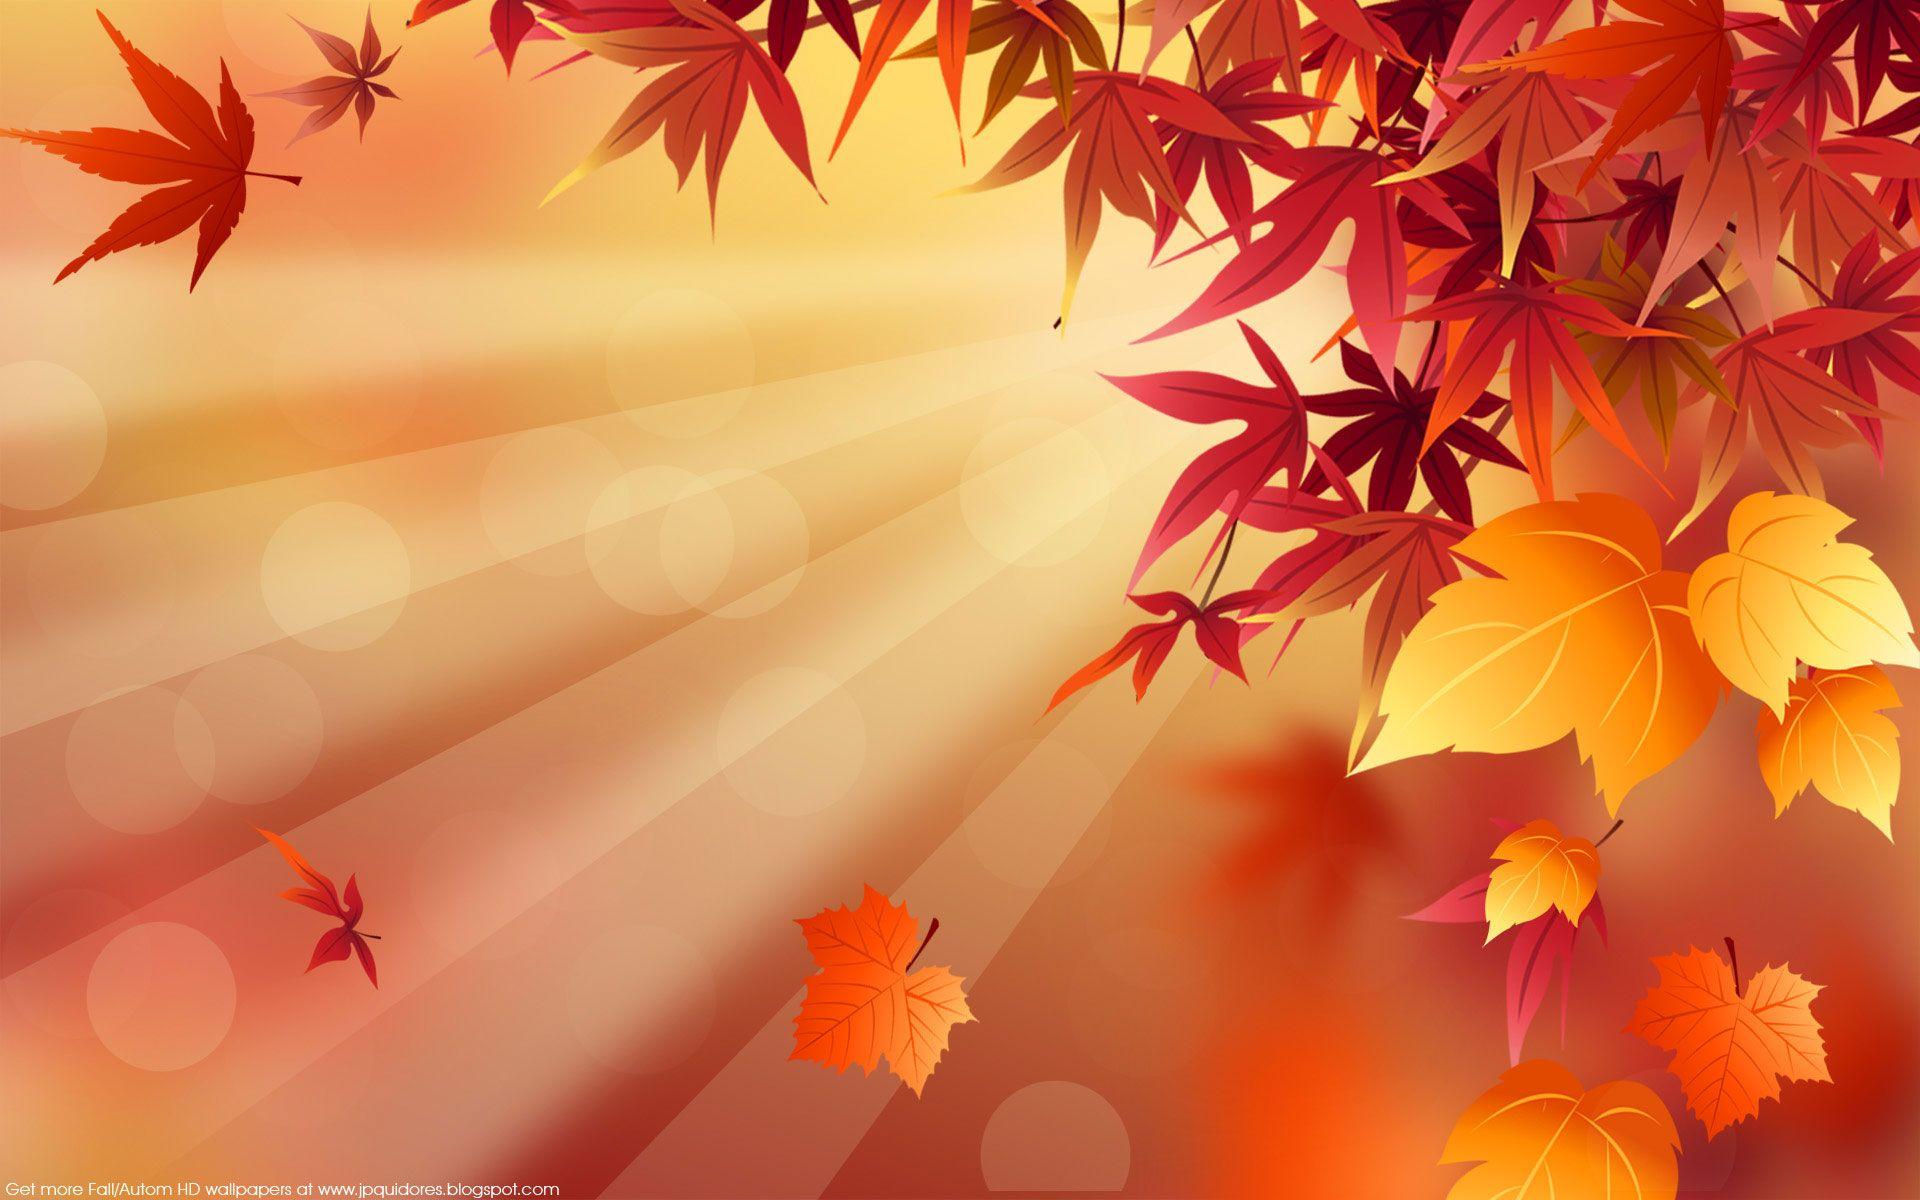 Autumn Photo Autumn HD Wallpaper to Download